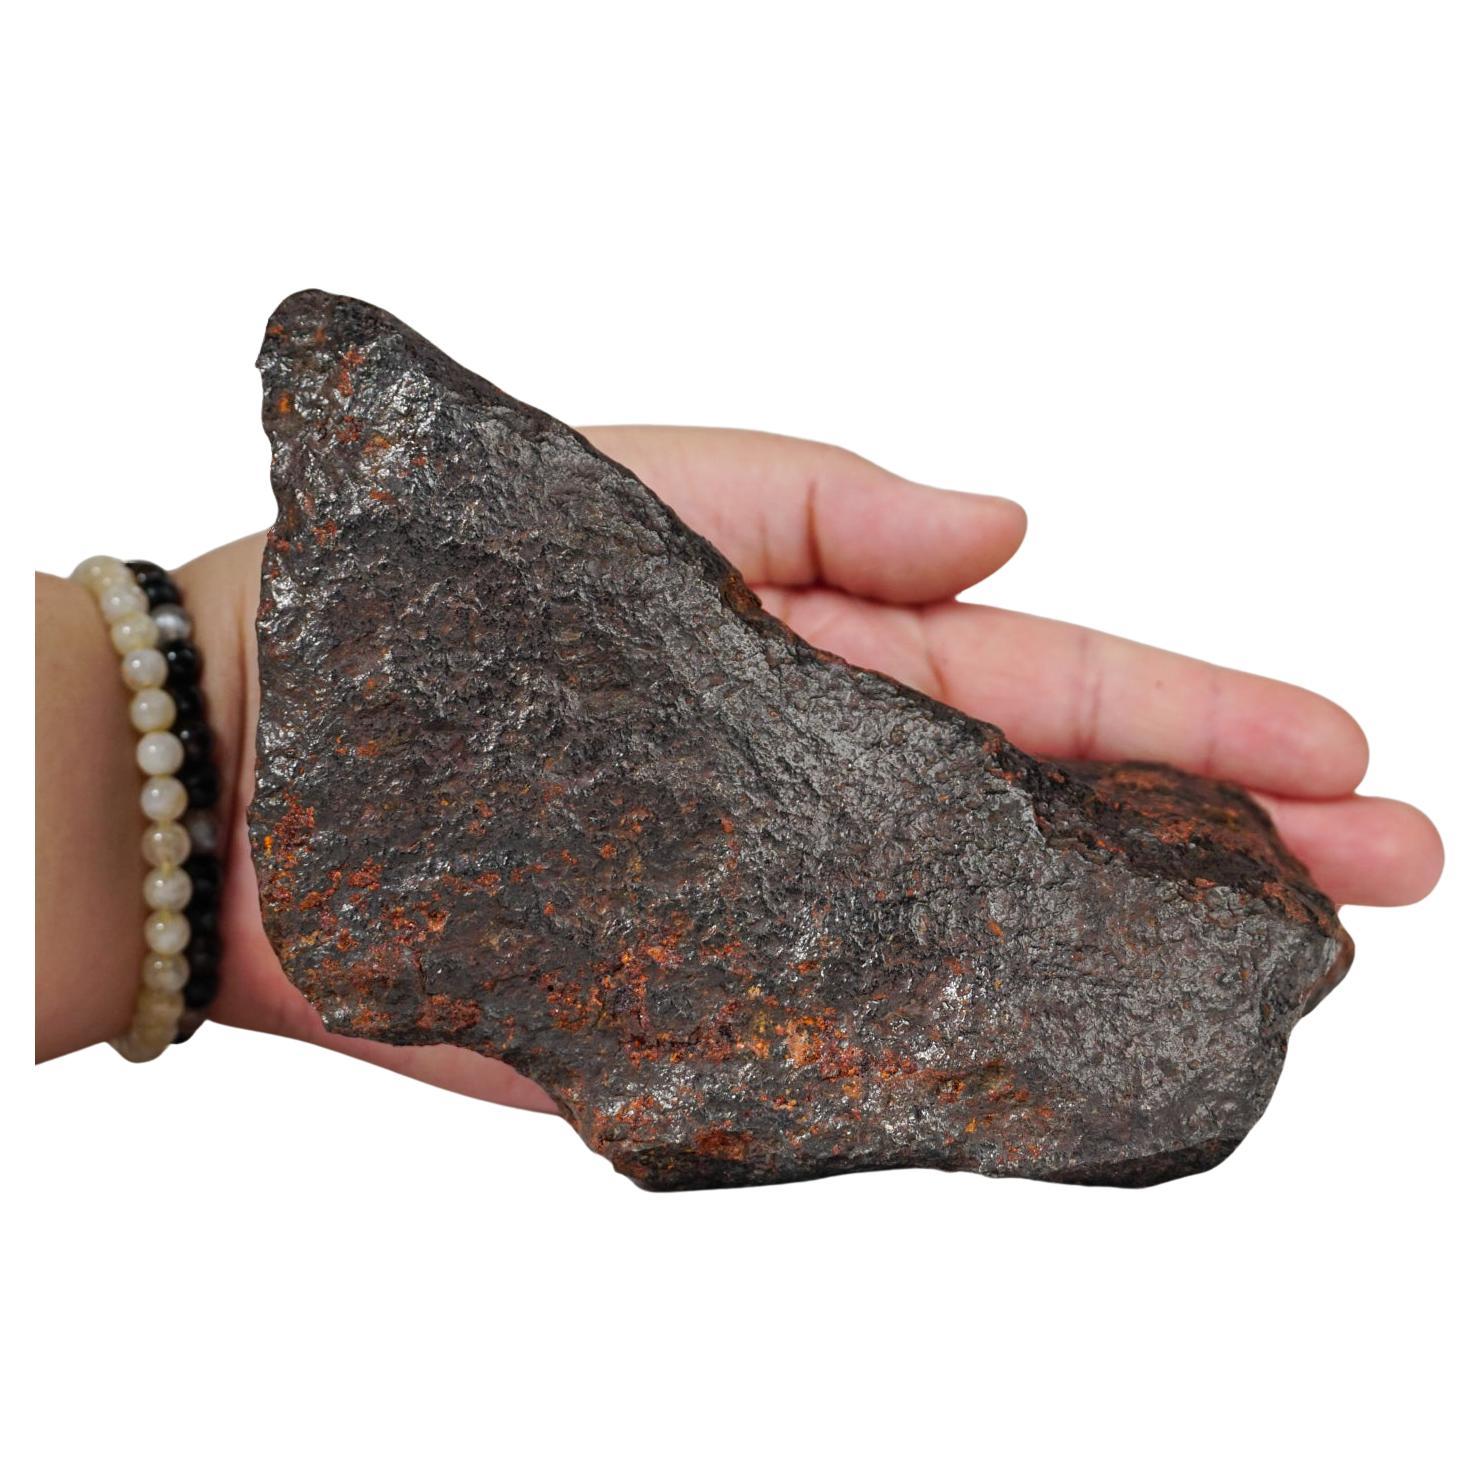 Genuine Large Canyon Diablo Iron Meteorite For Sale